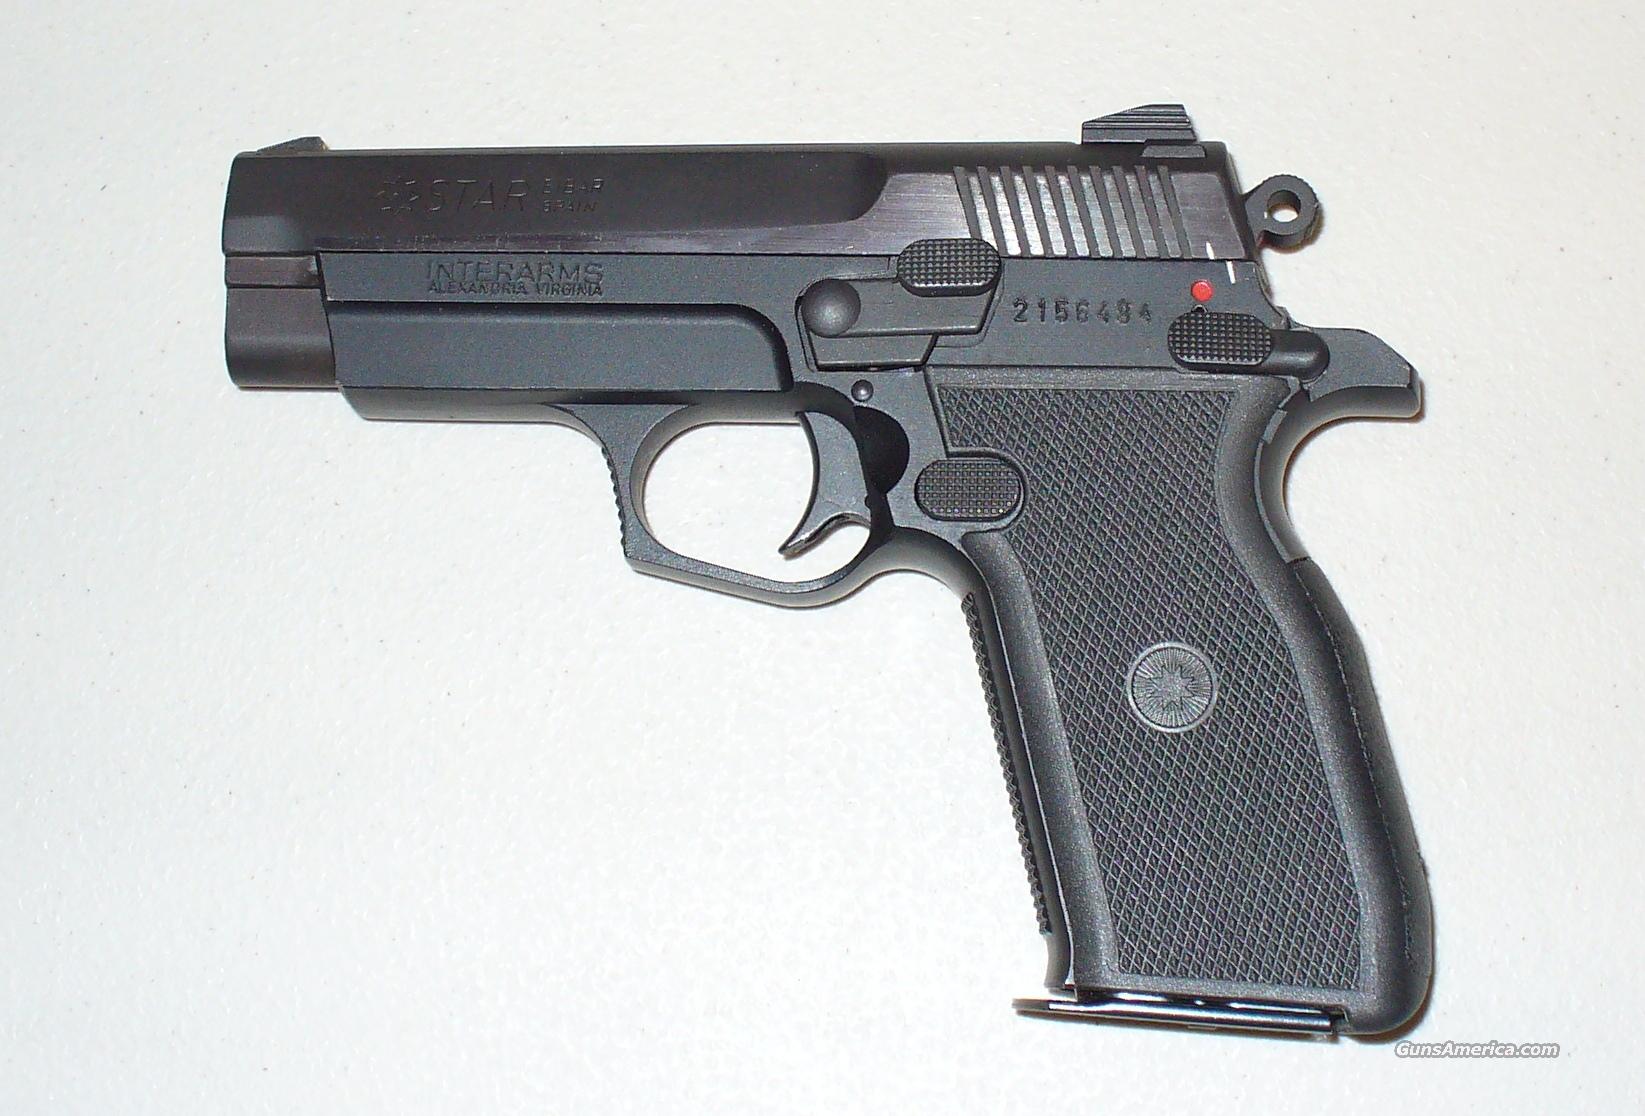 fire star pistol